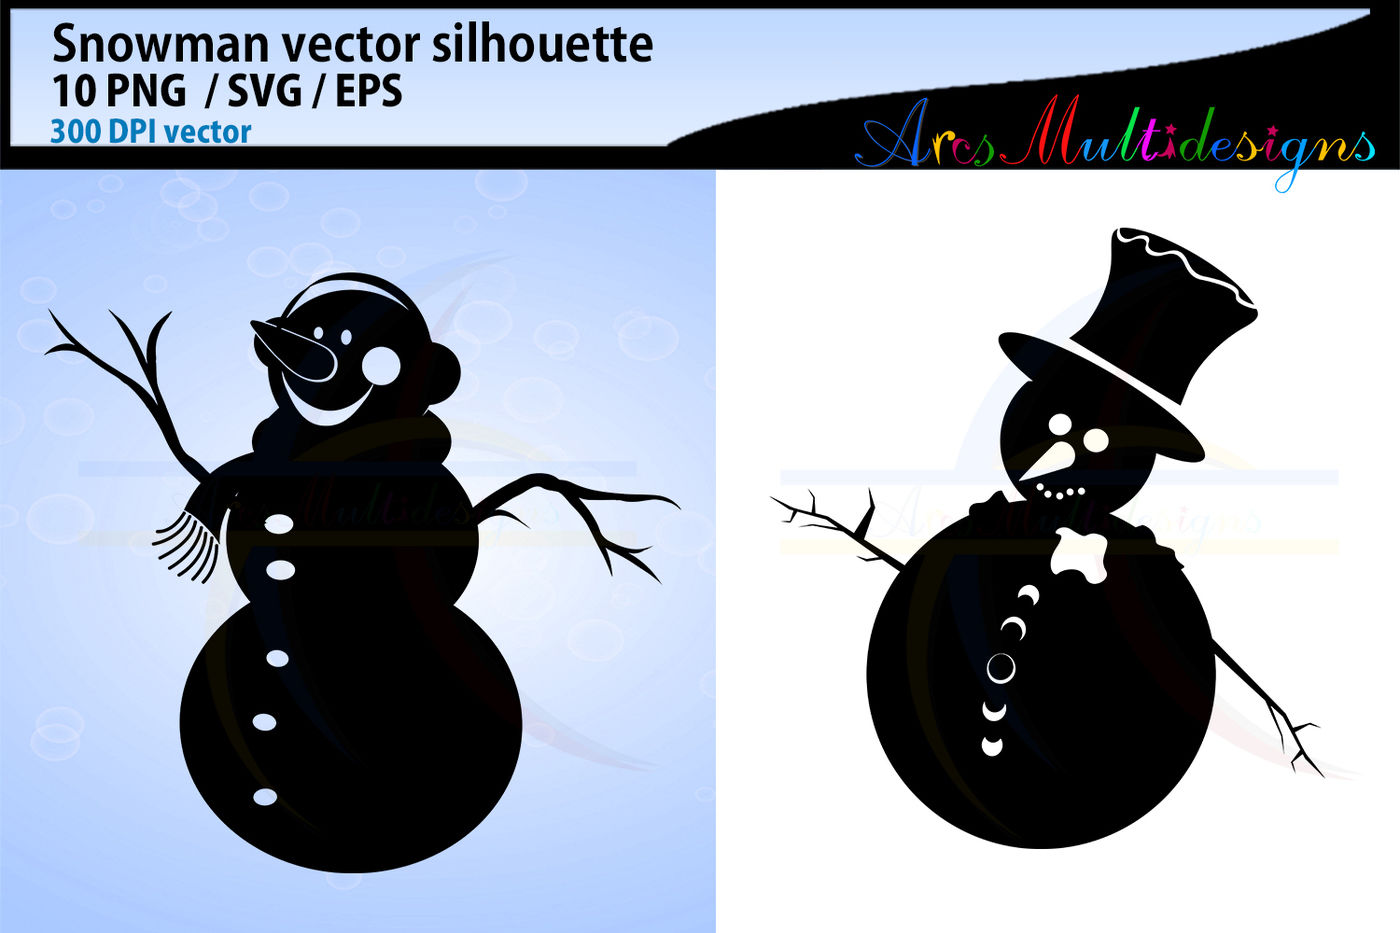 Download Snowman silhouette svg clipart / snowman / snowman icons / snowman By ArcsMultidesignsShop ...